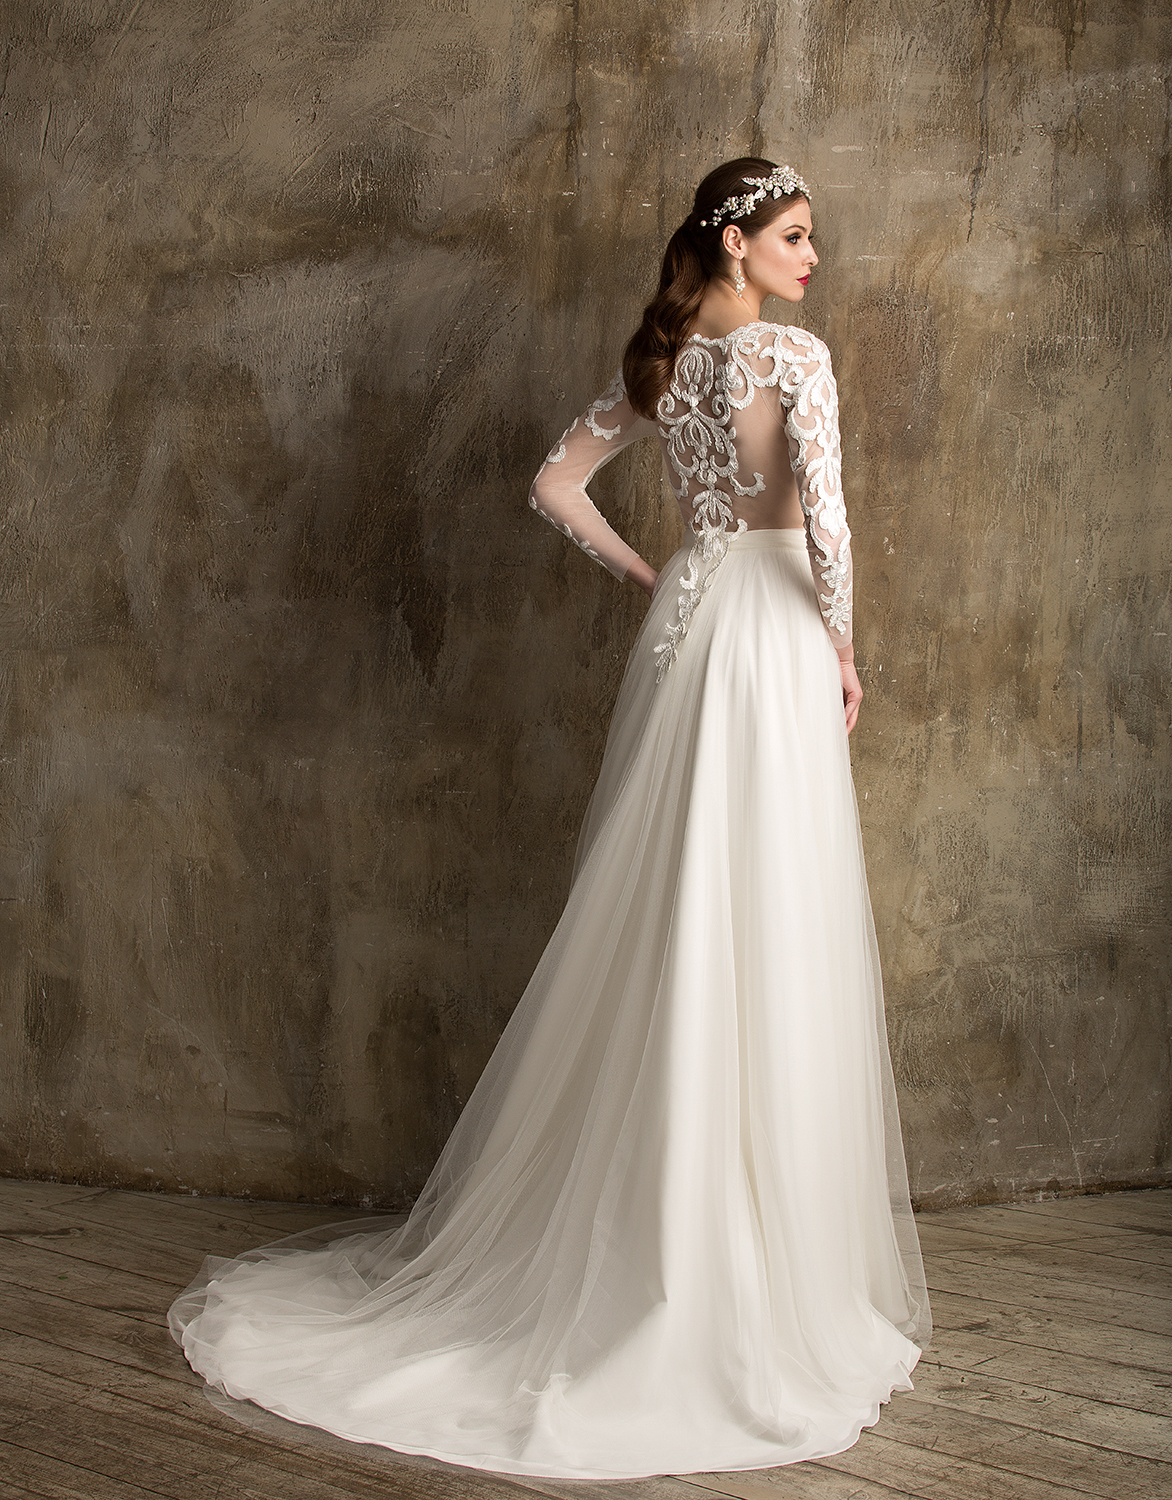 Adobe Portfolio bridal wedding catalog beauty Collection dress